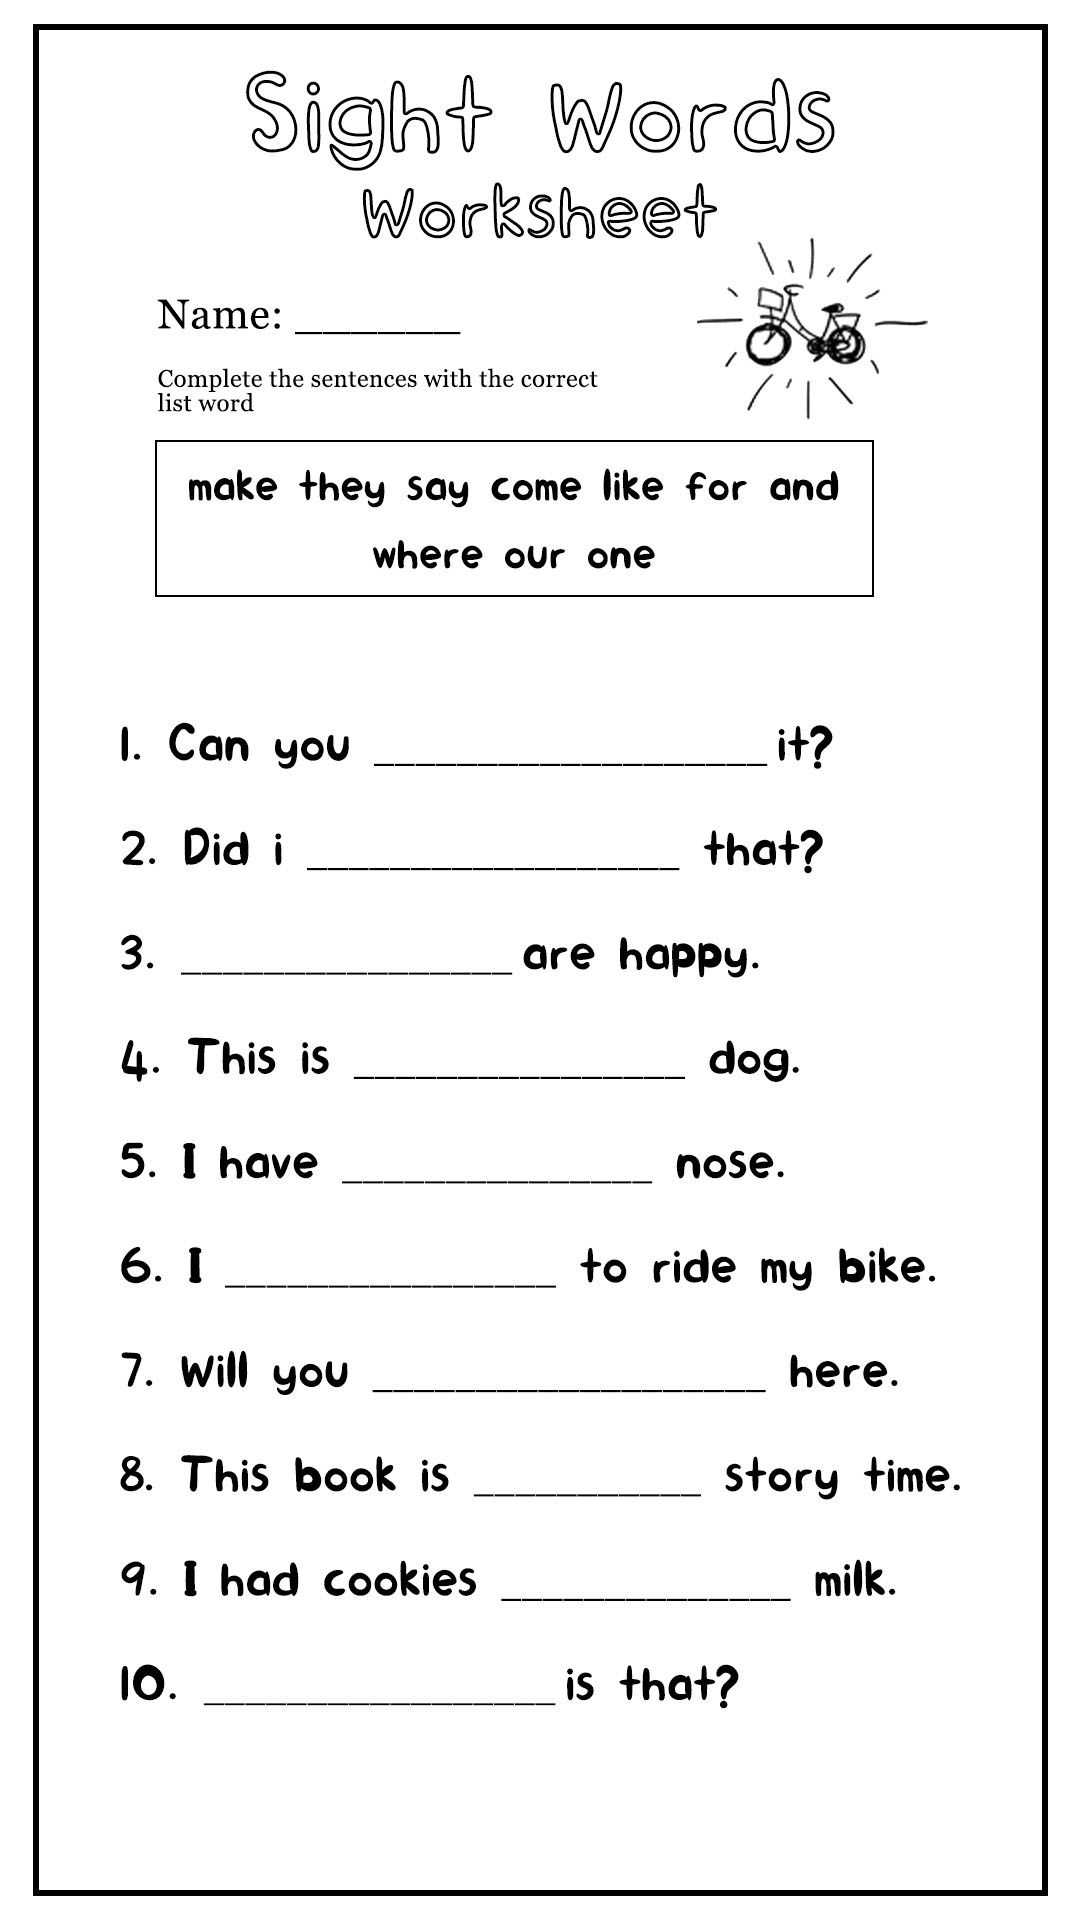 5th Grade Sight Words Worksheets Image